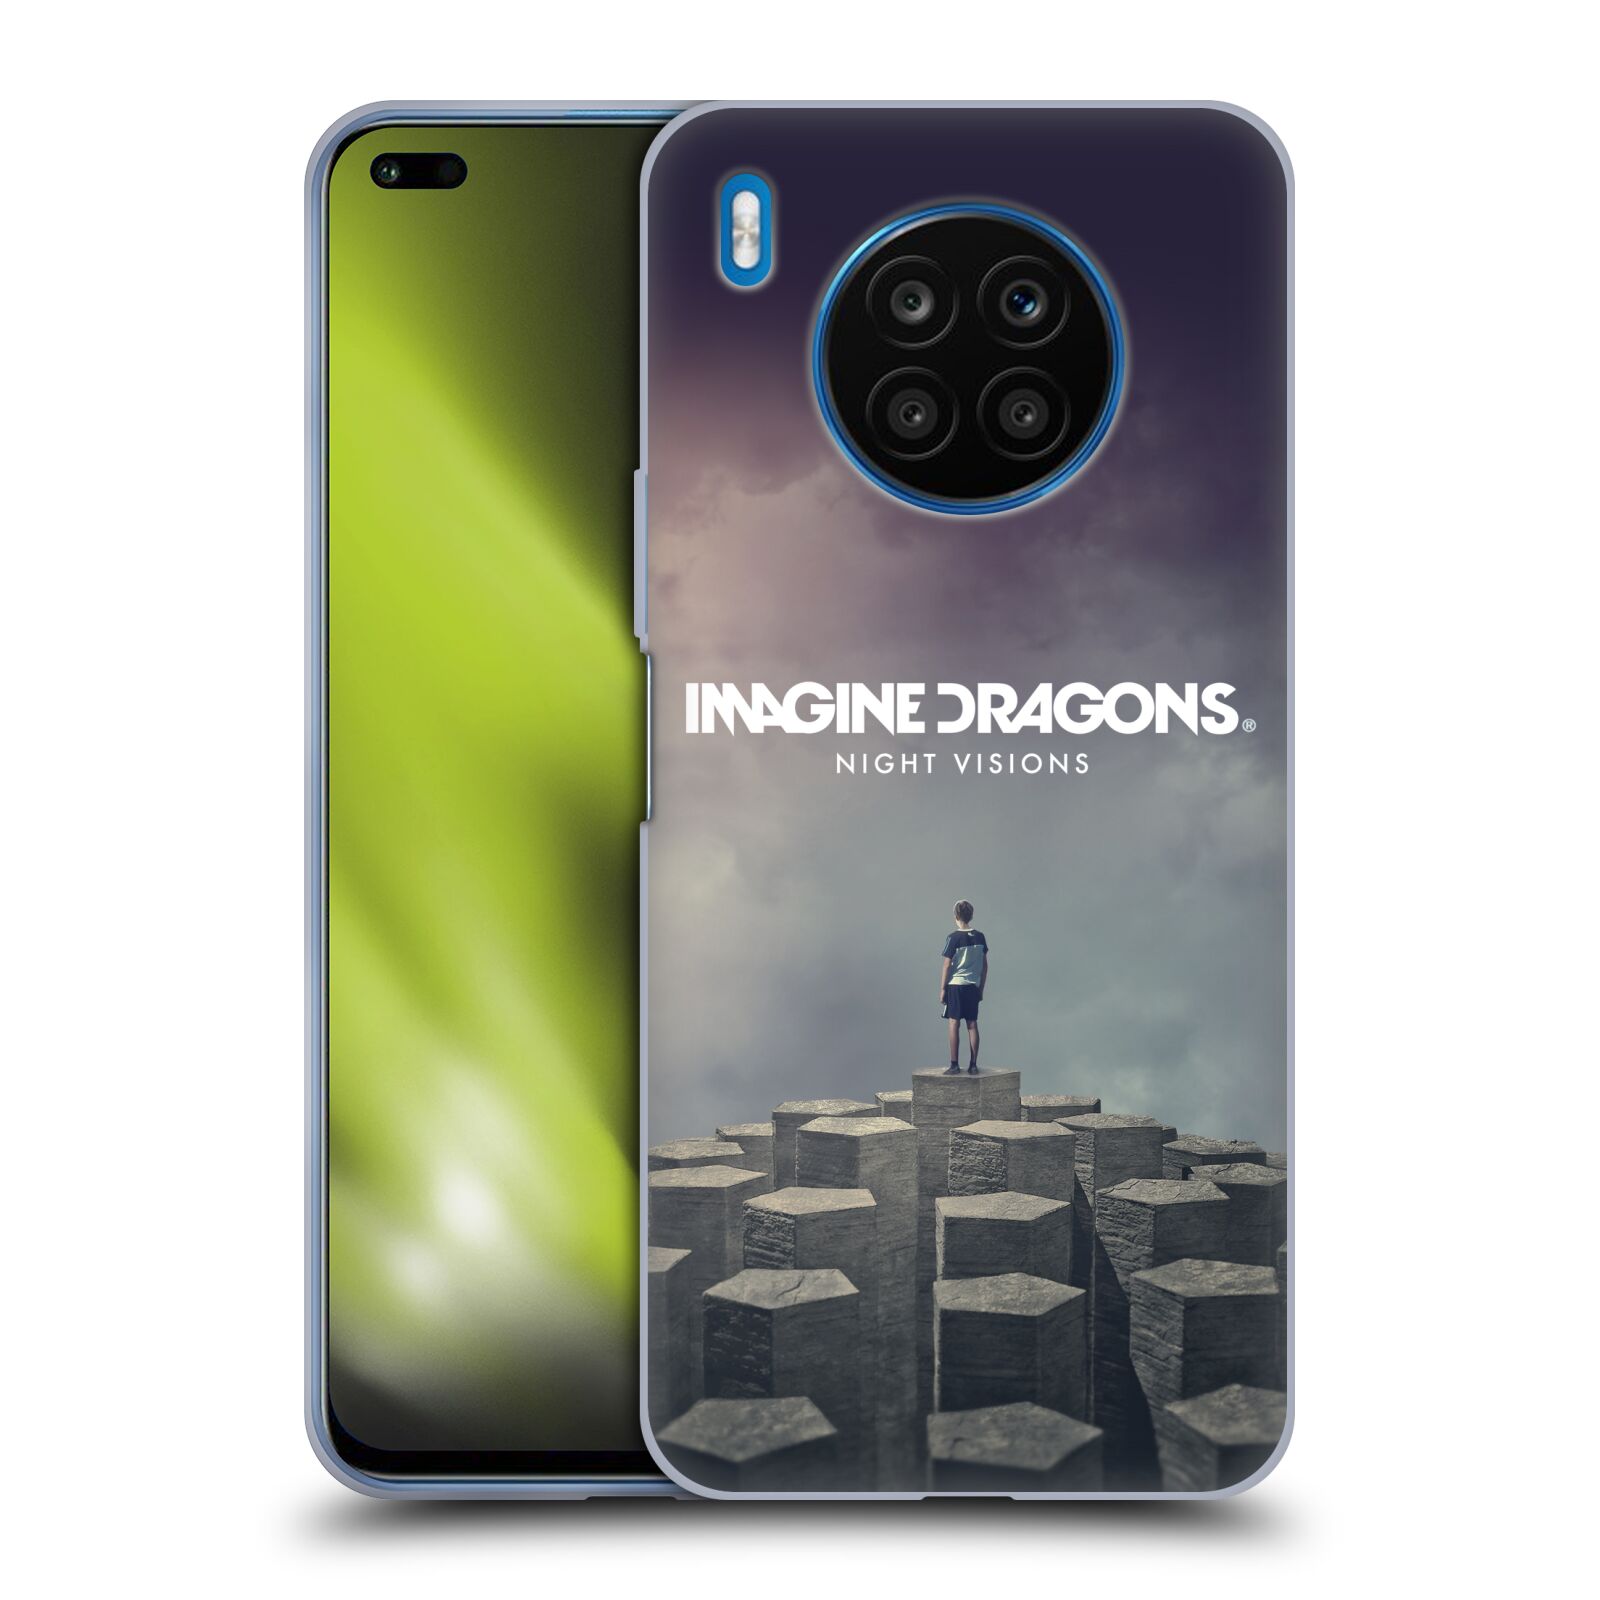 Silikonové pouzdro na mobil Huawei Nova 8i / Honor 50 Lite - Imagine Dragons - Night Visions